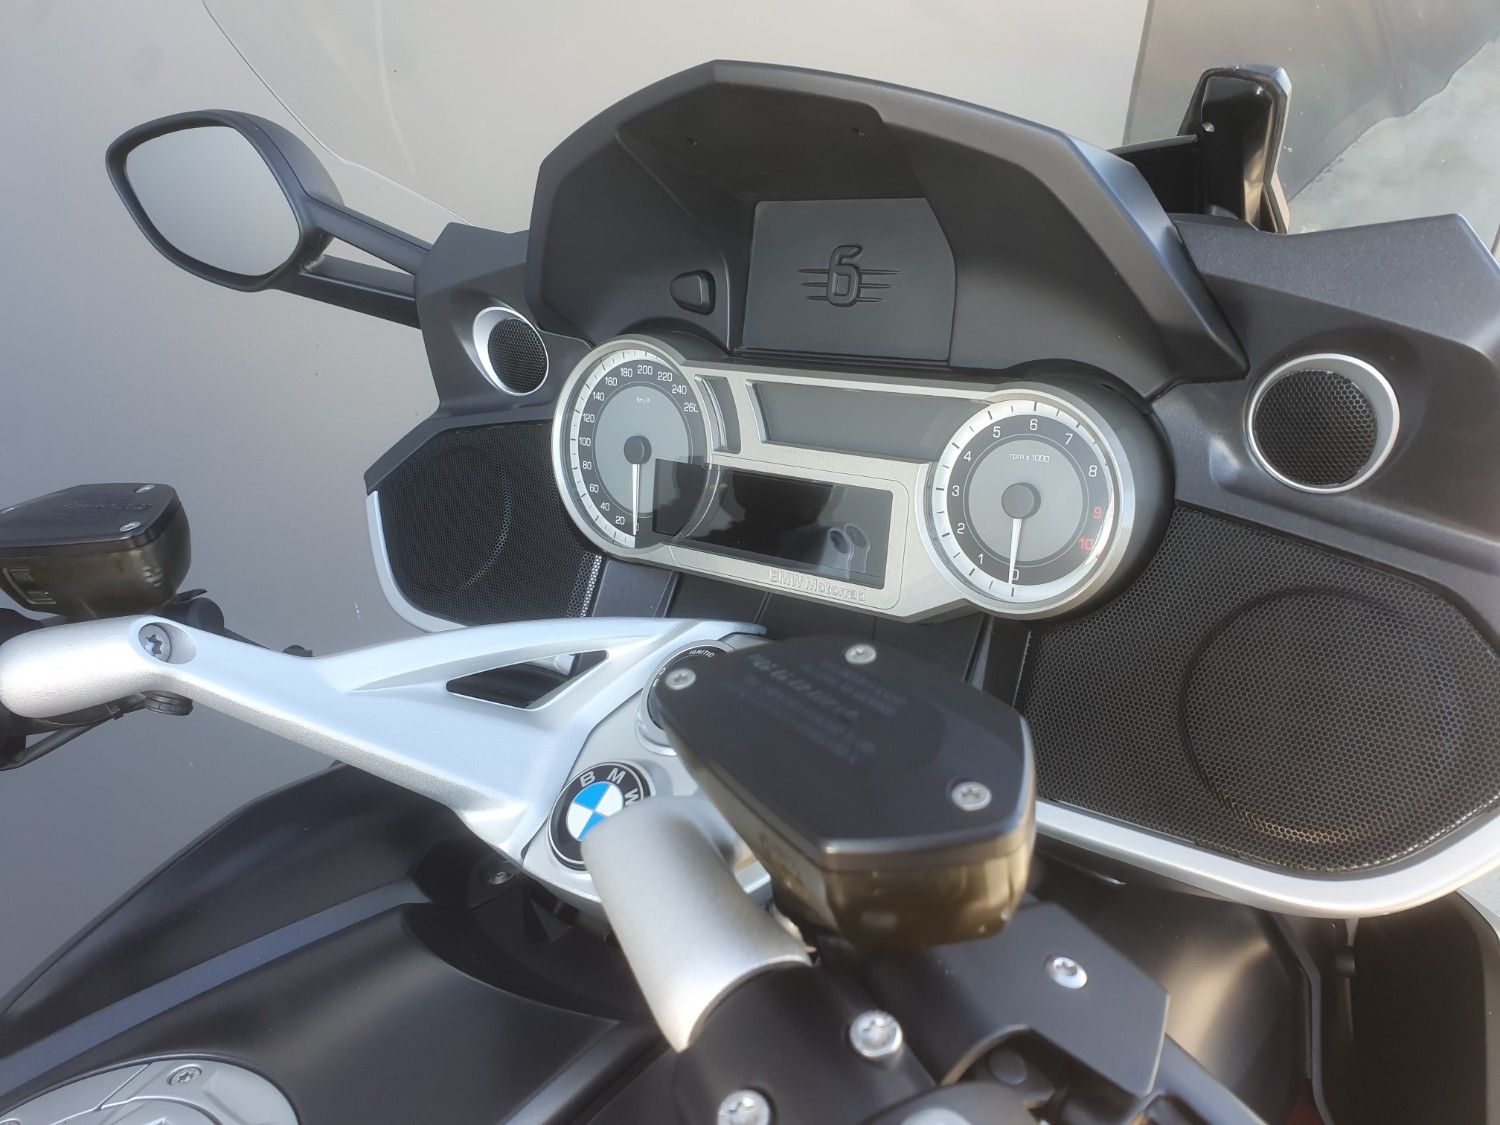 2015 BMW K 1600 GT Motorcycle Image 16